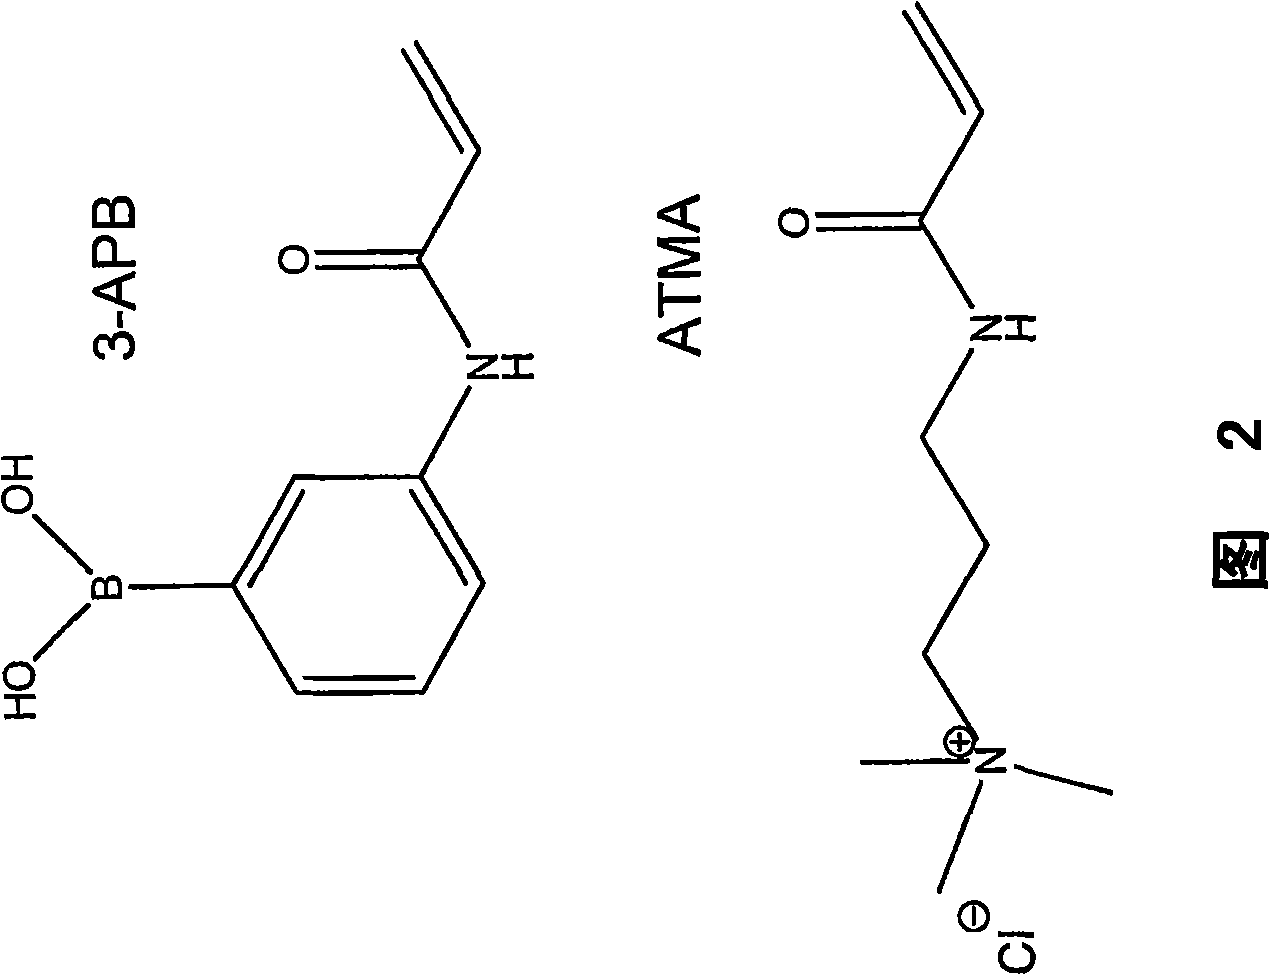 Novel boronate complex and its use in a glucose sensor